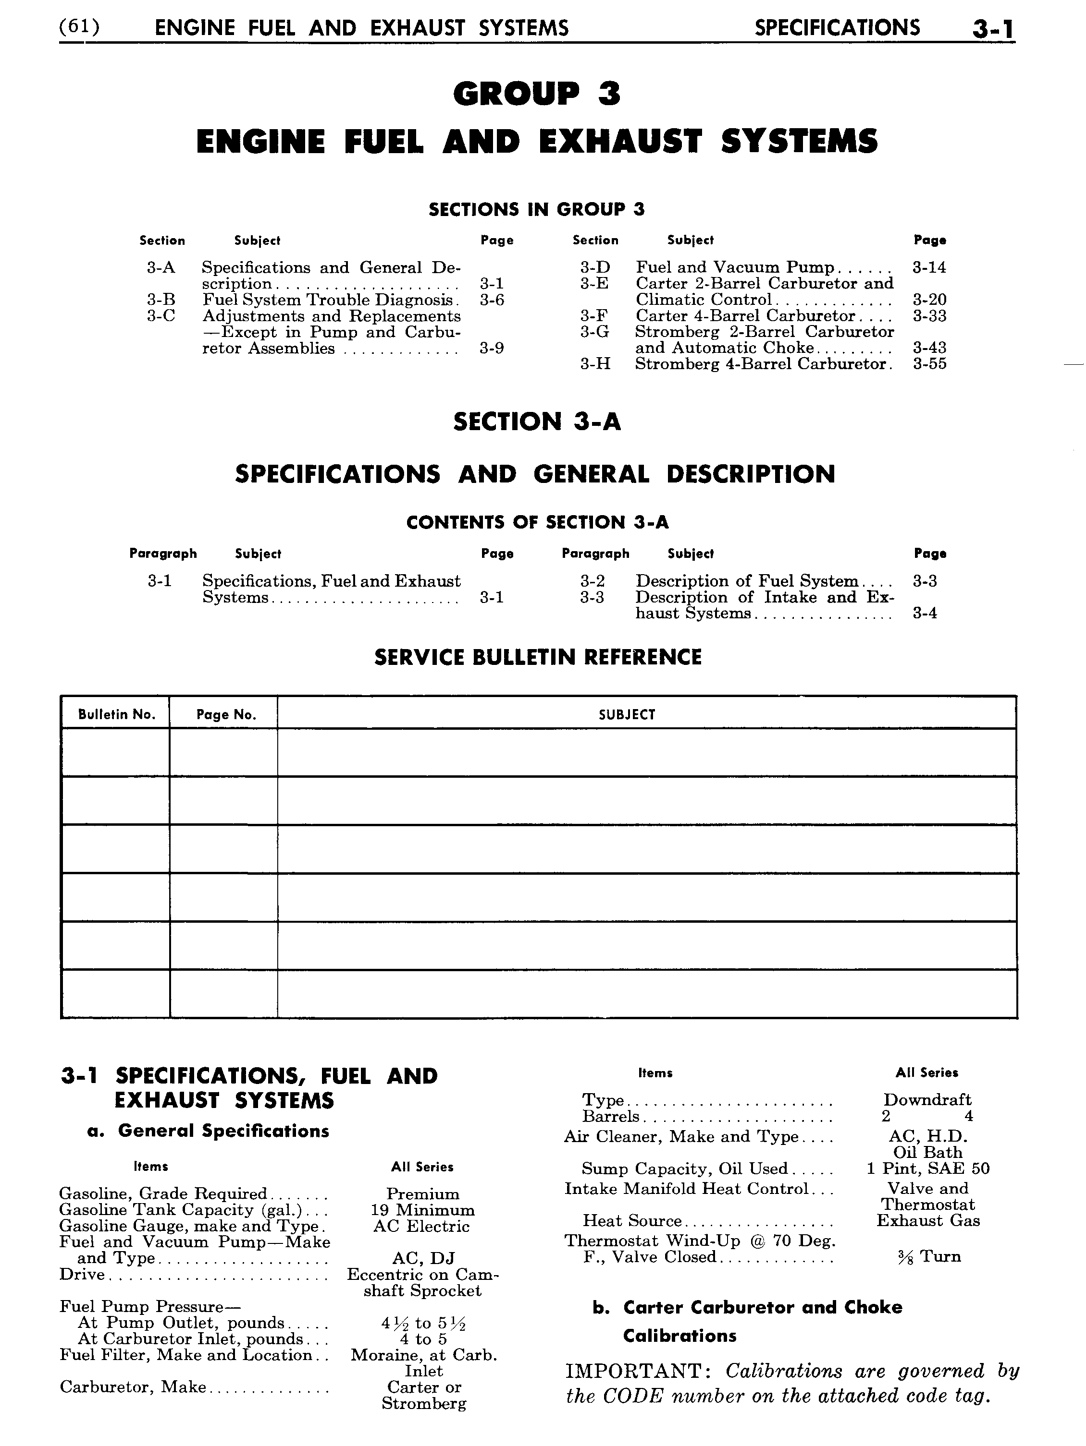 n_04 1954 Buick Shop Manual - Engine Fuel & Exhaust-001-001.jpg